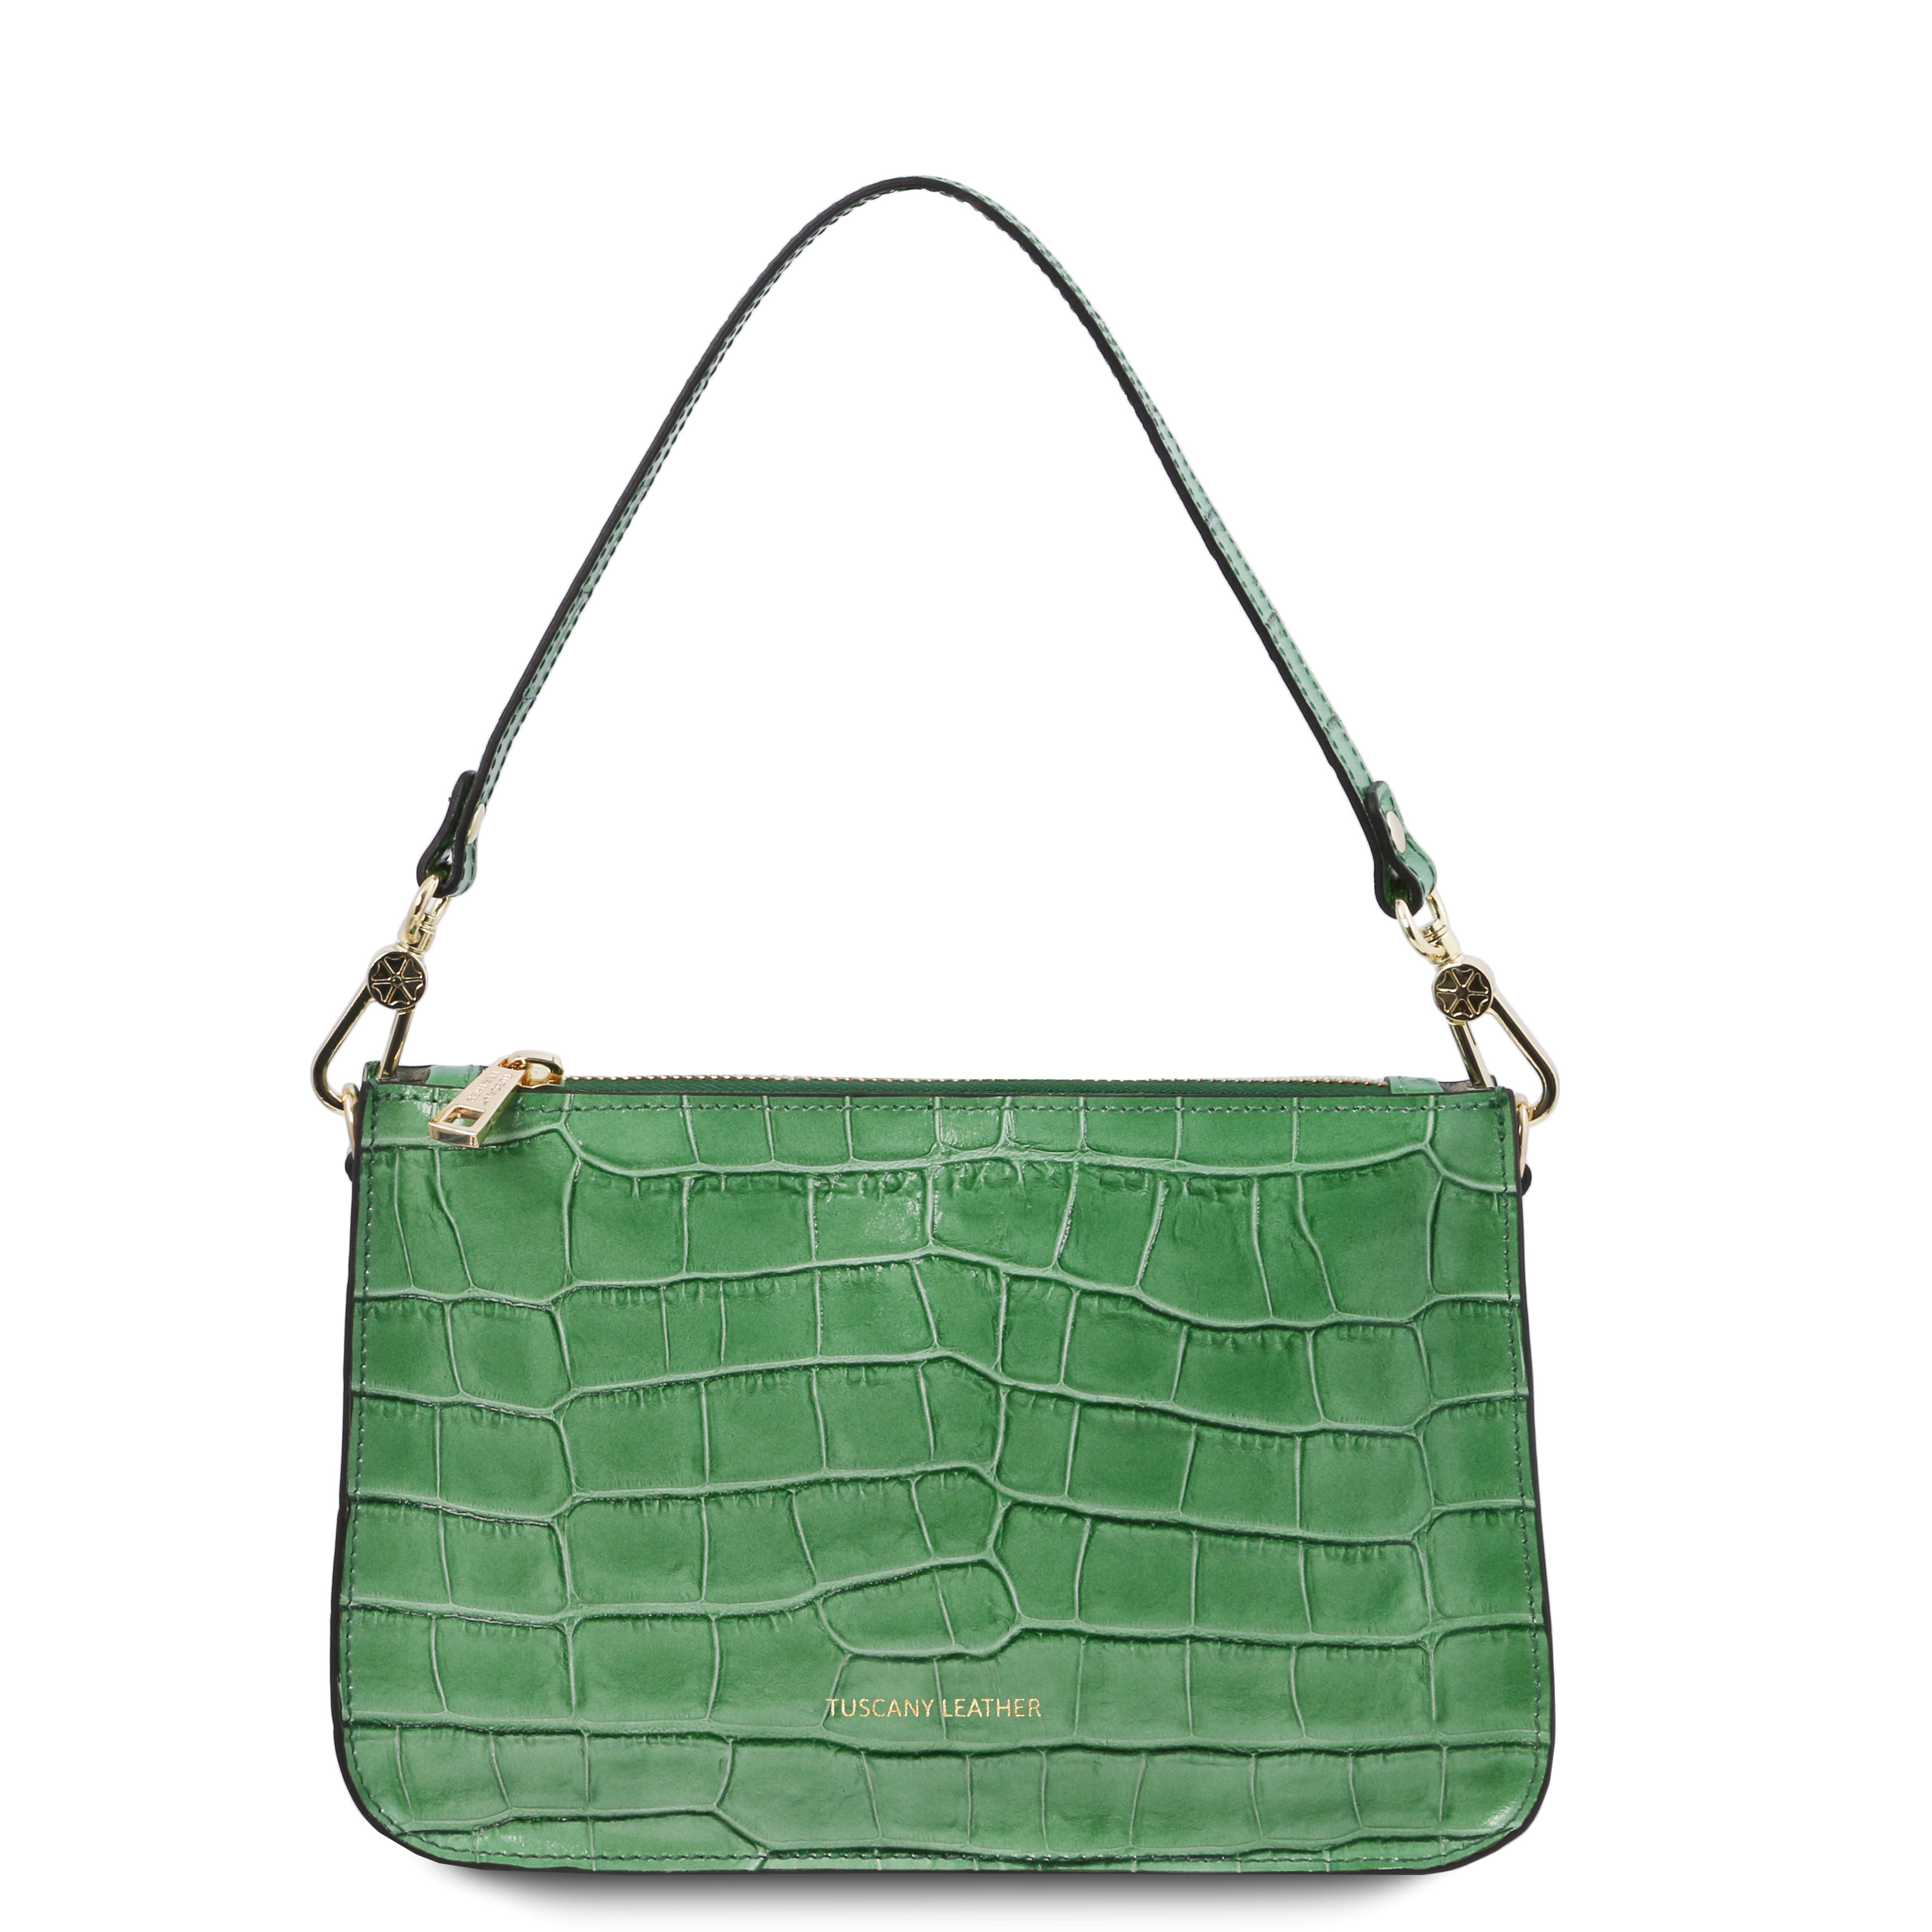 Ring Clutch - Emerald Green Fur – Kim White Bags/Belts